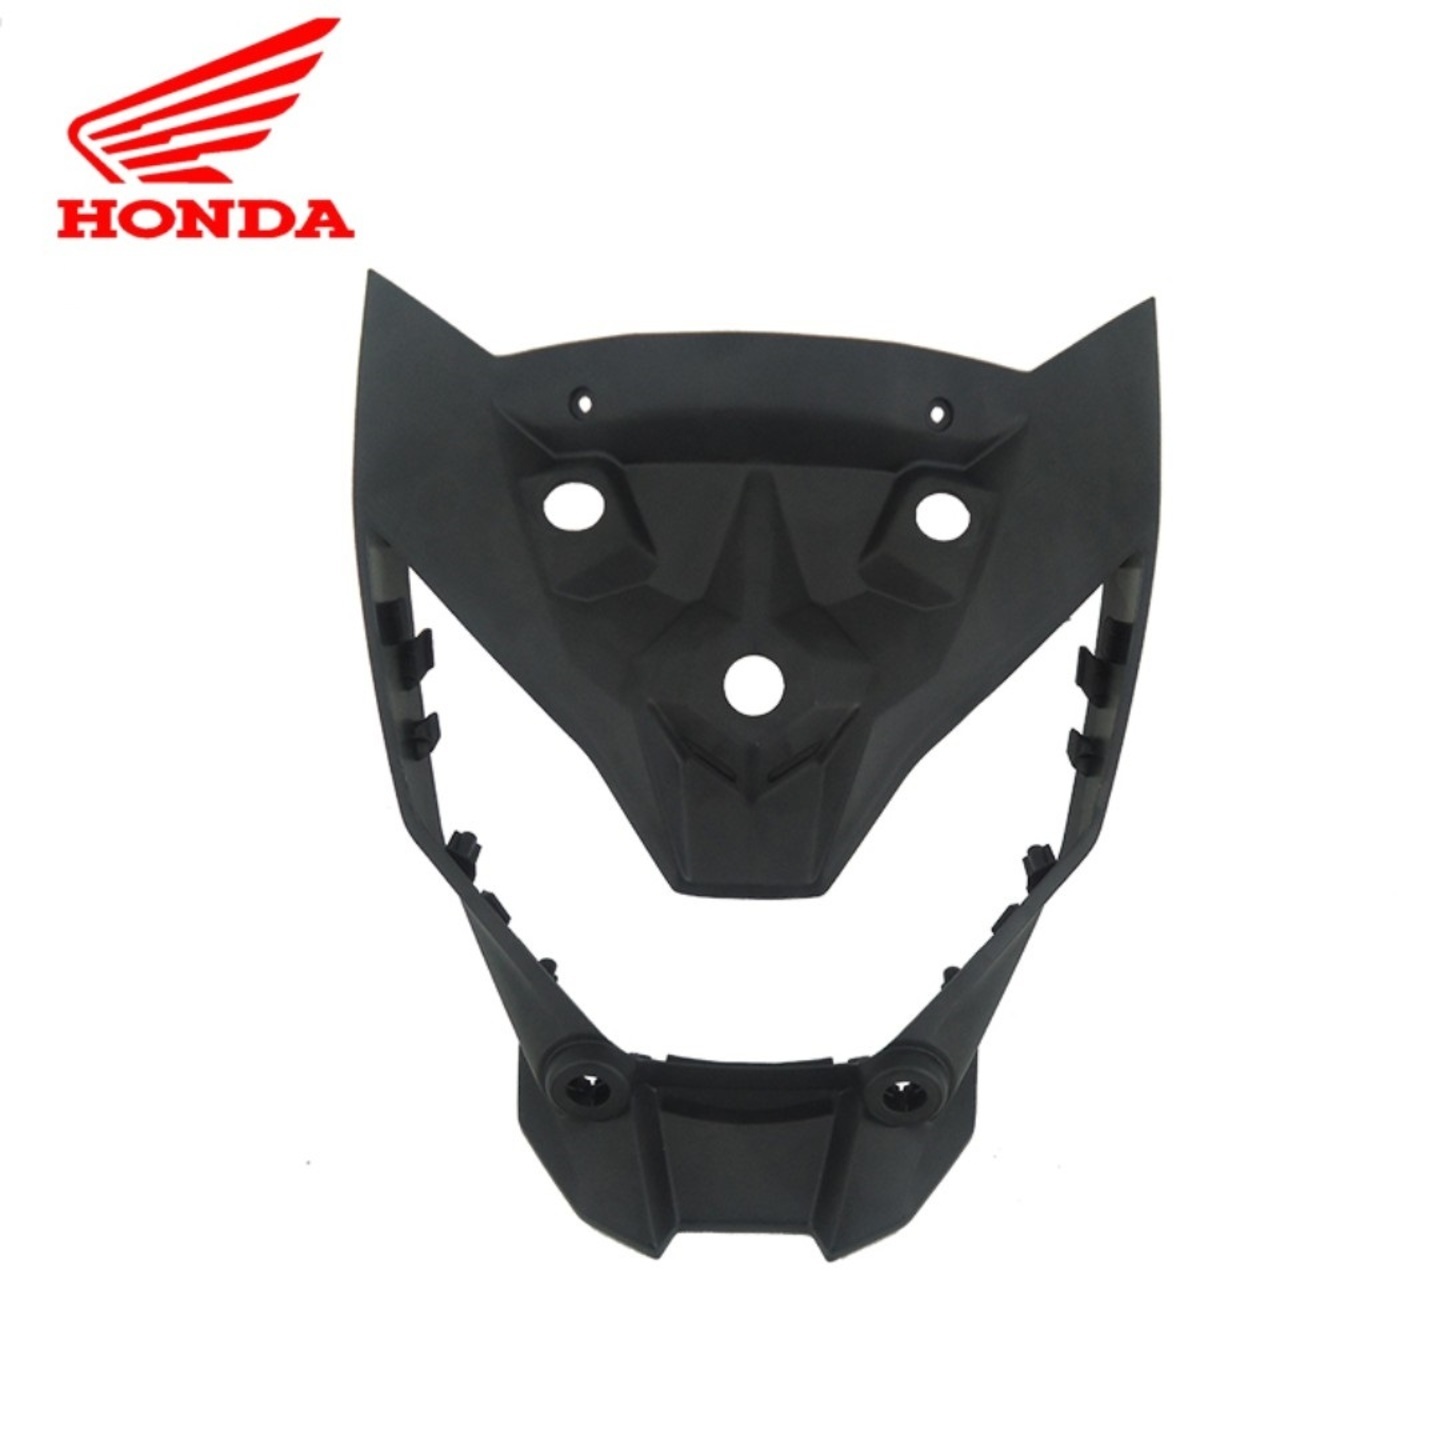 Honda CBF190X headlight head light head lamp front frame covers cover 